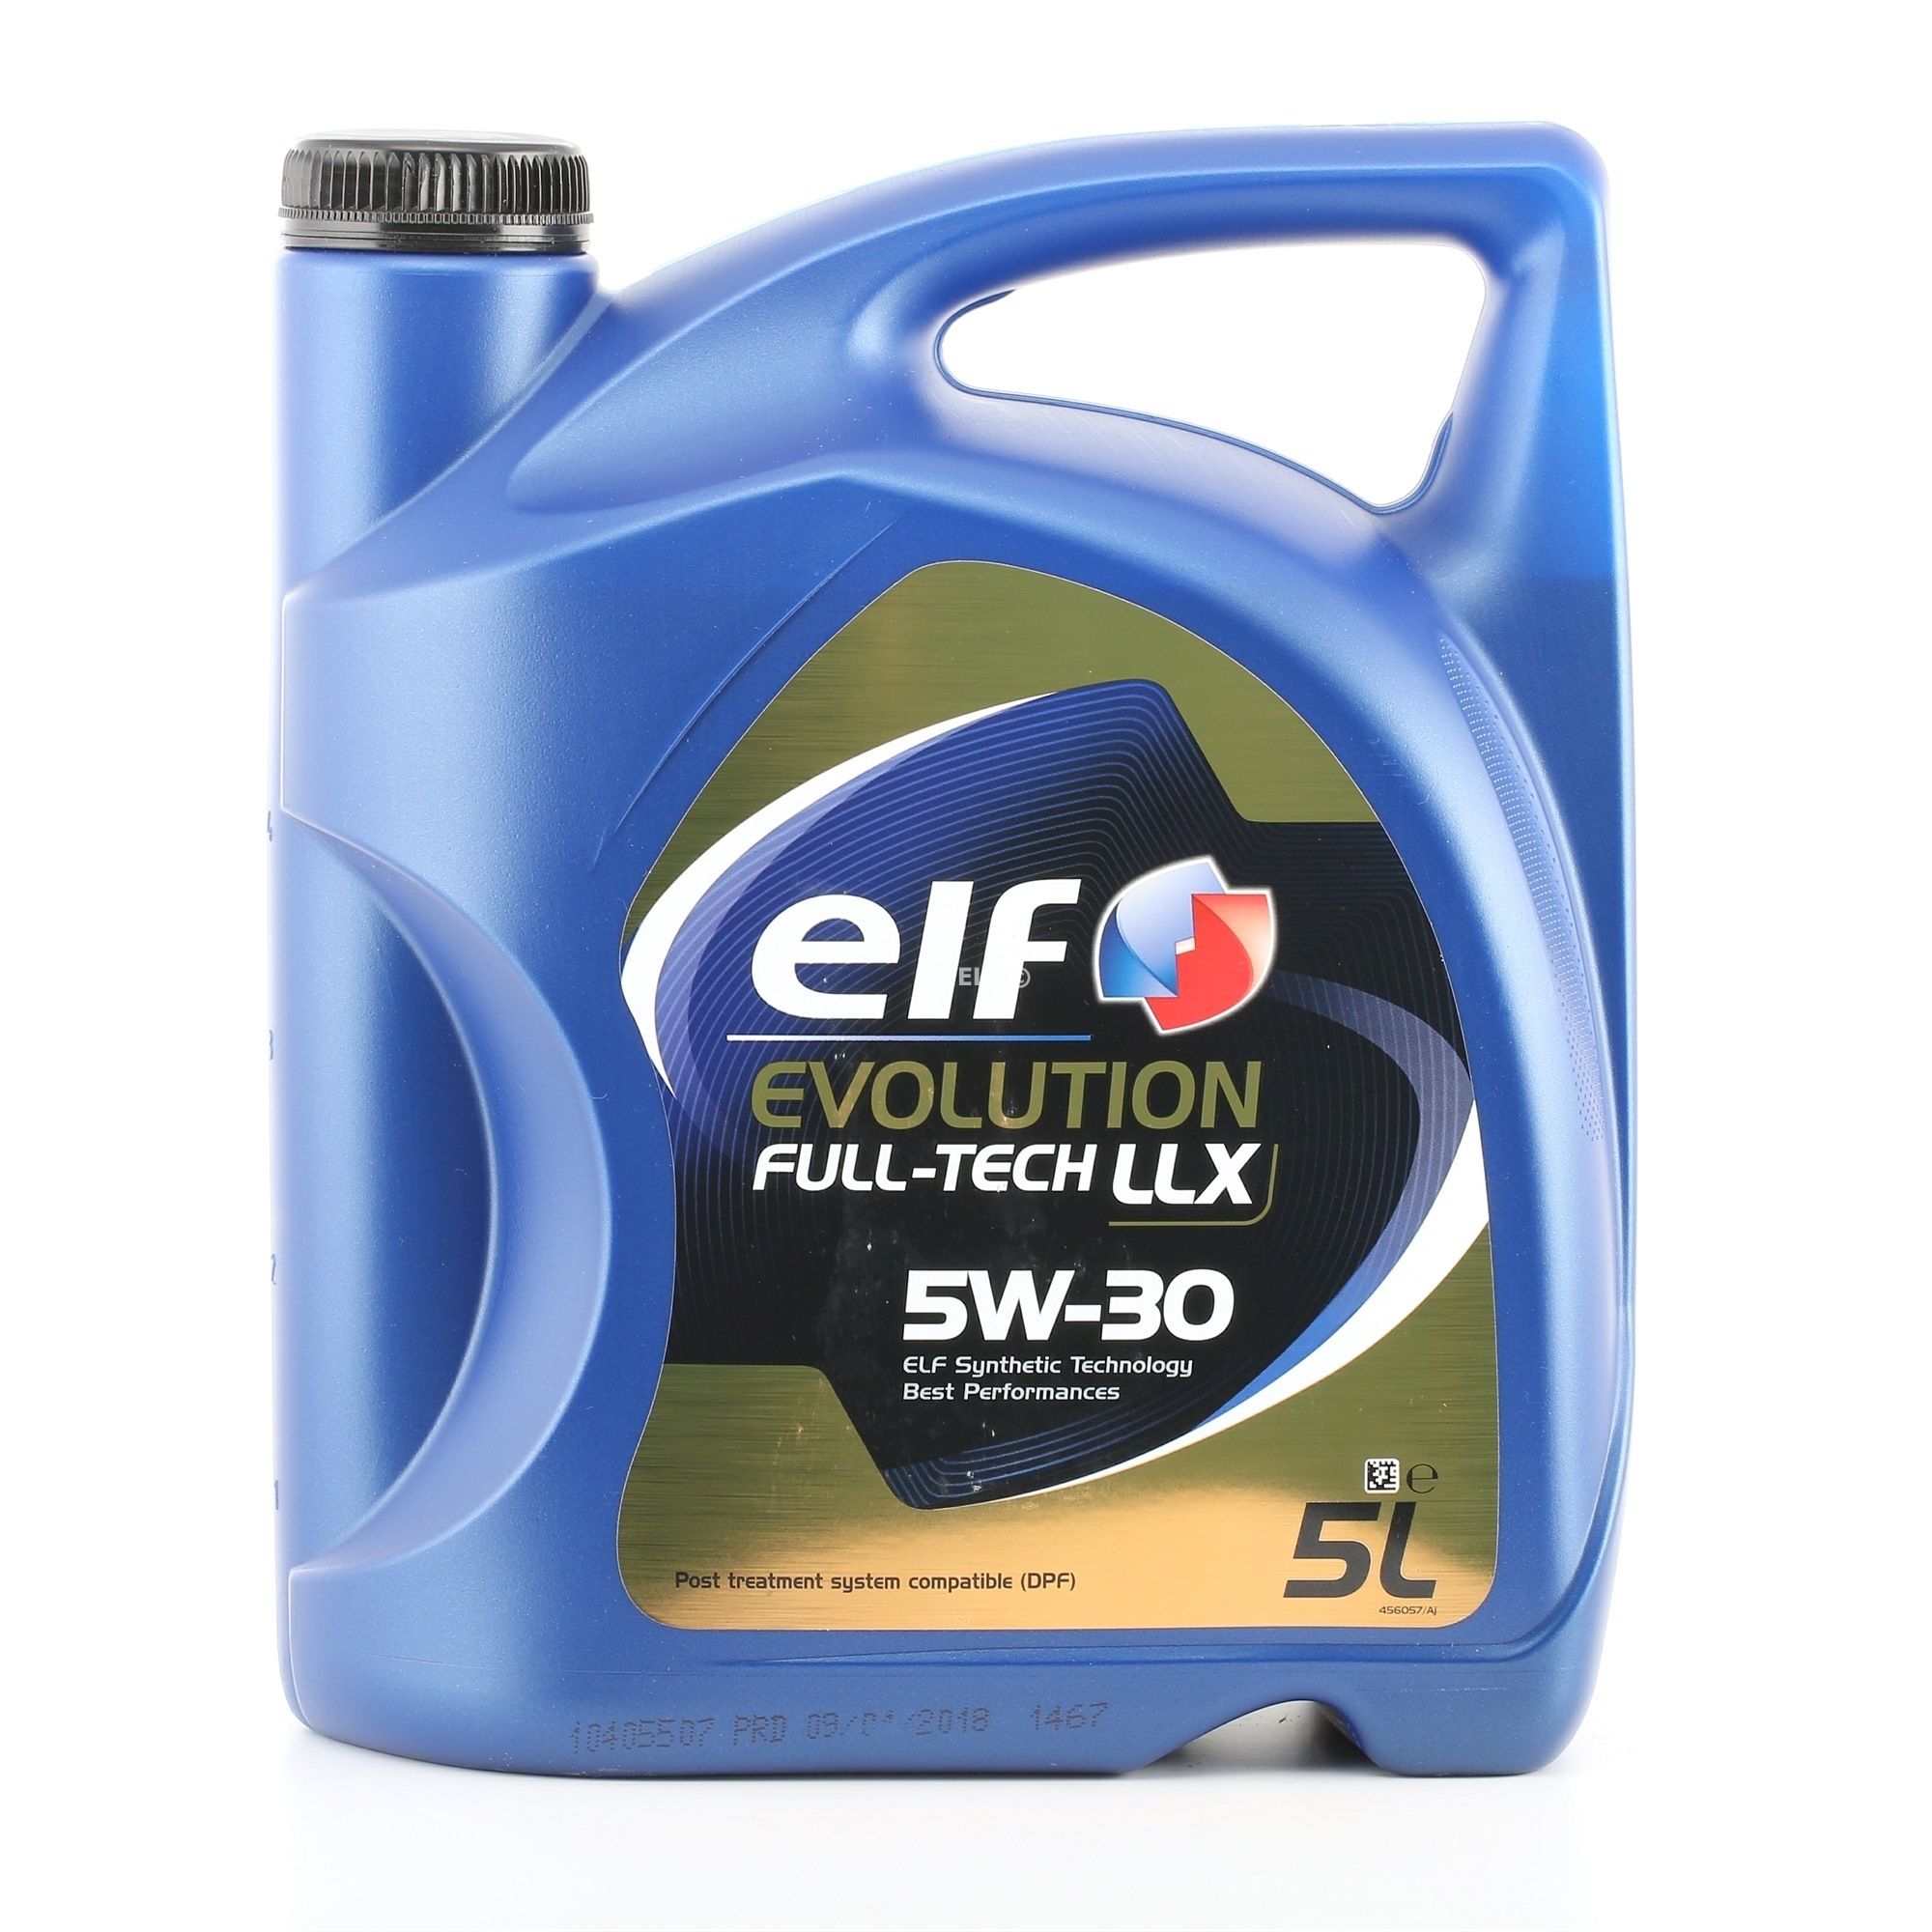 Kaufen KFZ Motoröl ELF 2194890 Evolution, Full-Tech LLX 5W-30, 5l, Synthetiköl